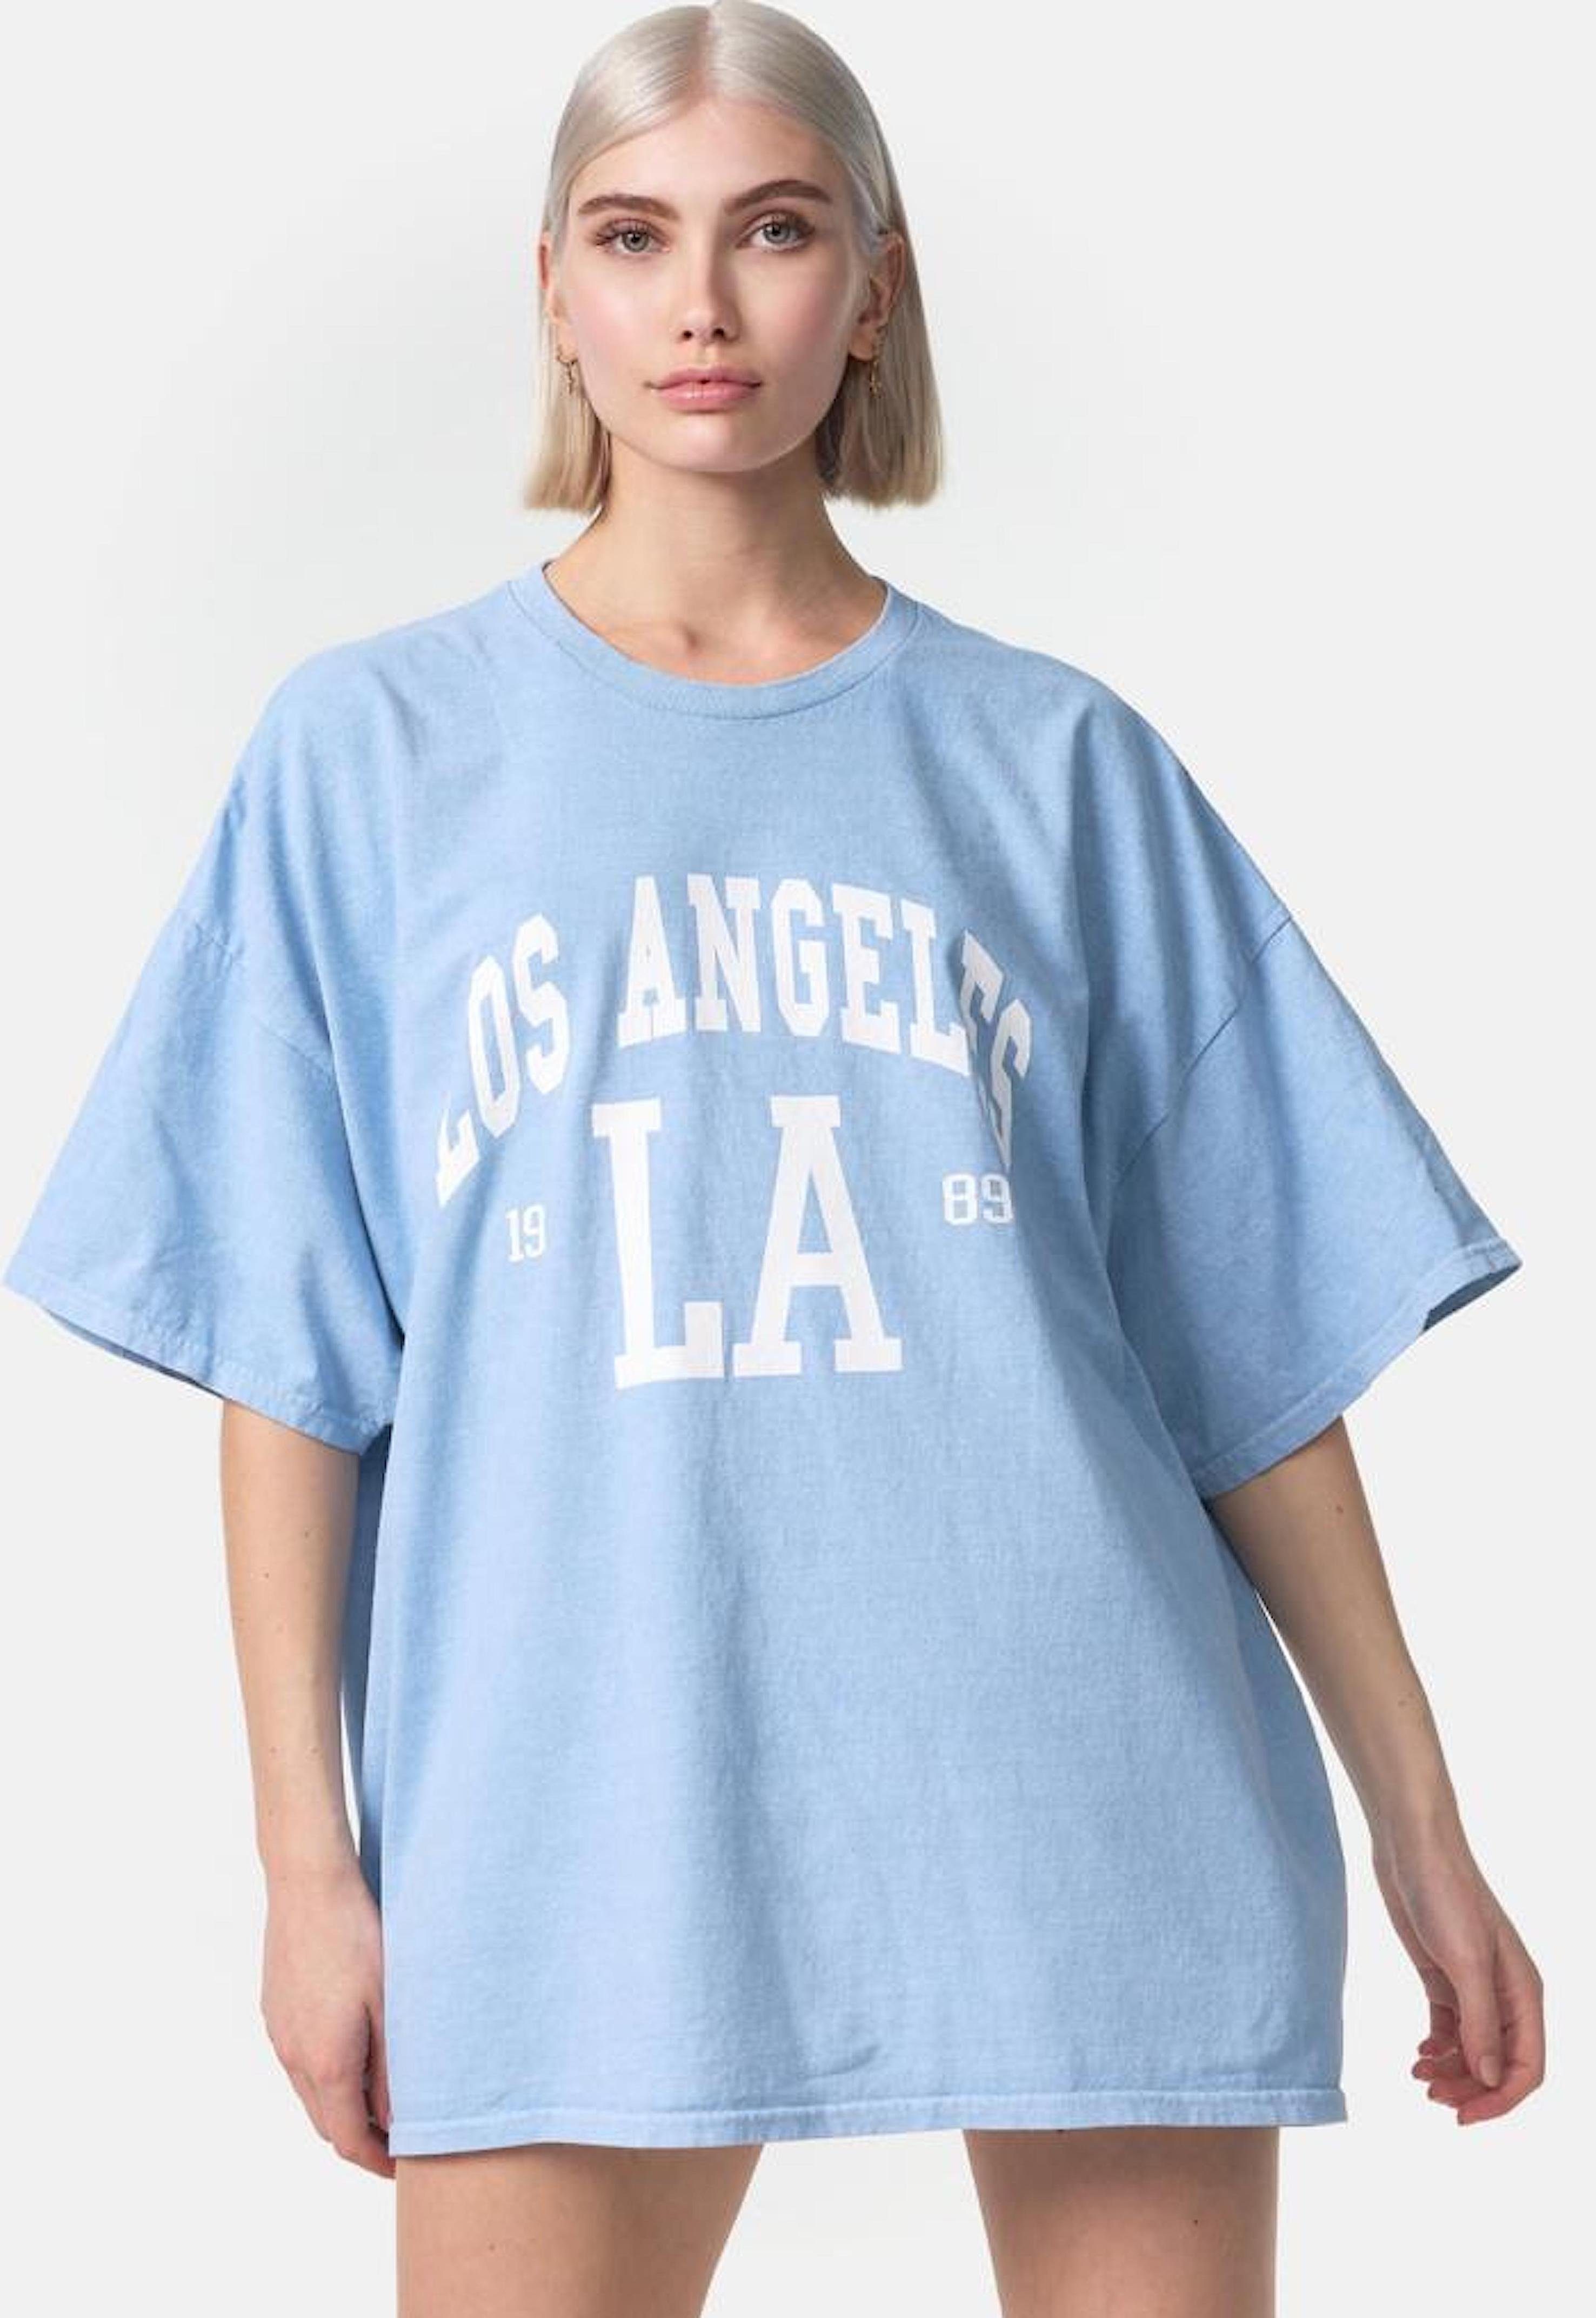 Worldclassca T-Shirt Worldclassca Oversized LA LOS ANGELES Print T-Shirt lang Sommer Tee Skyblau